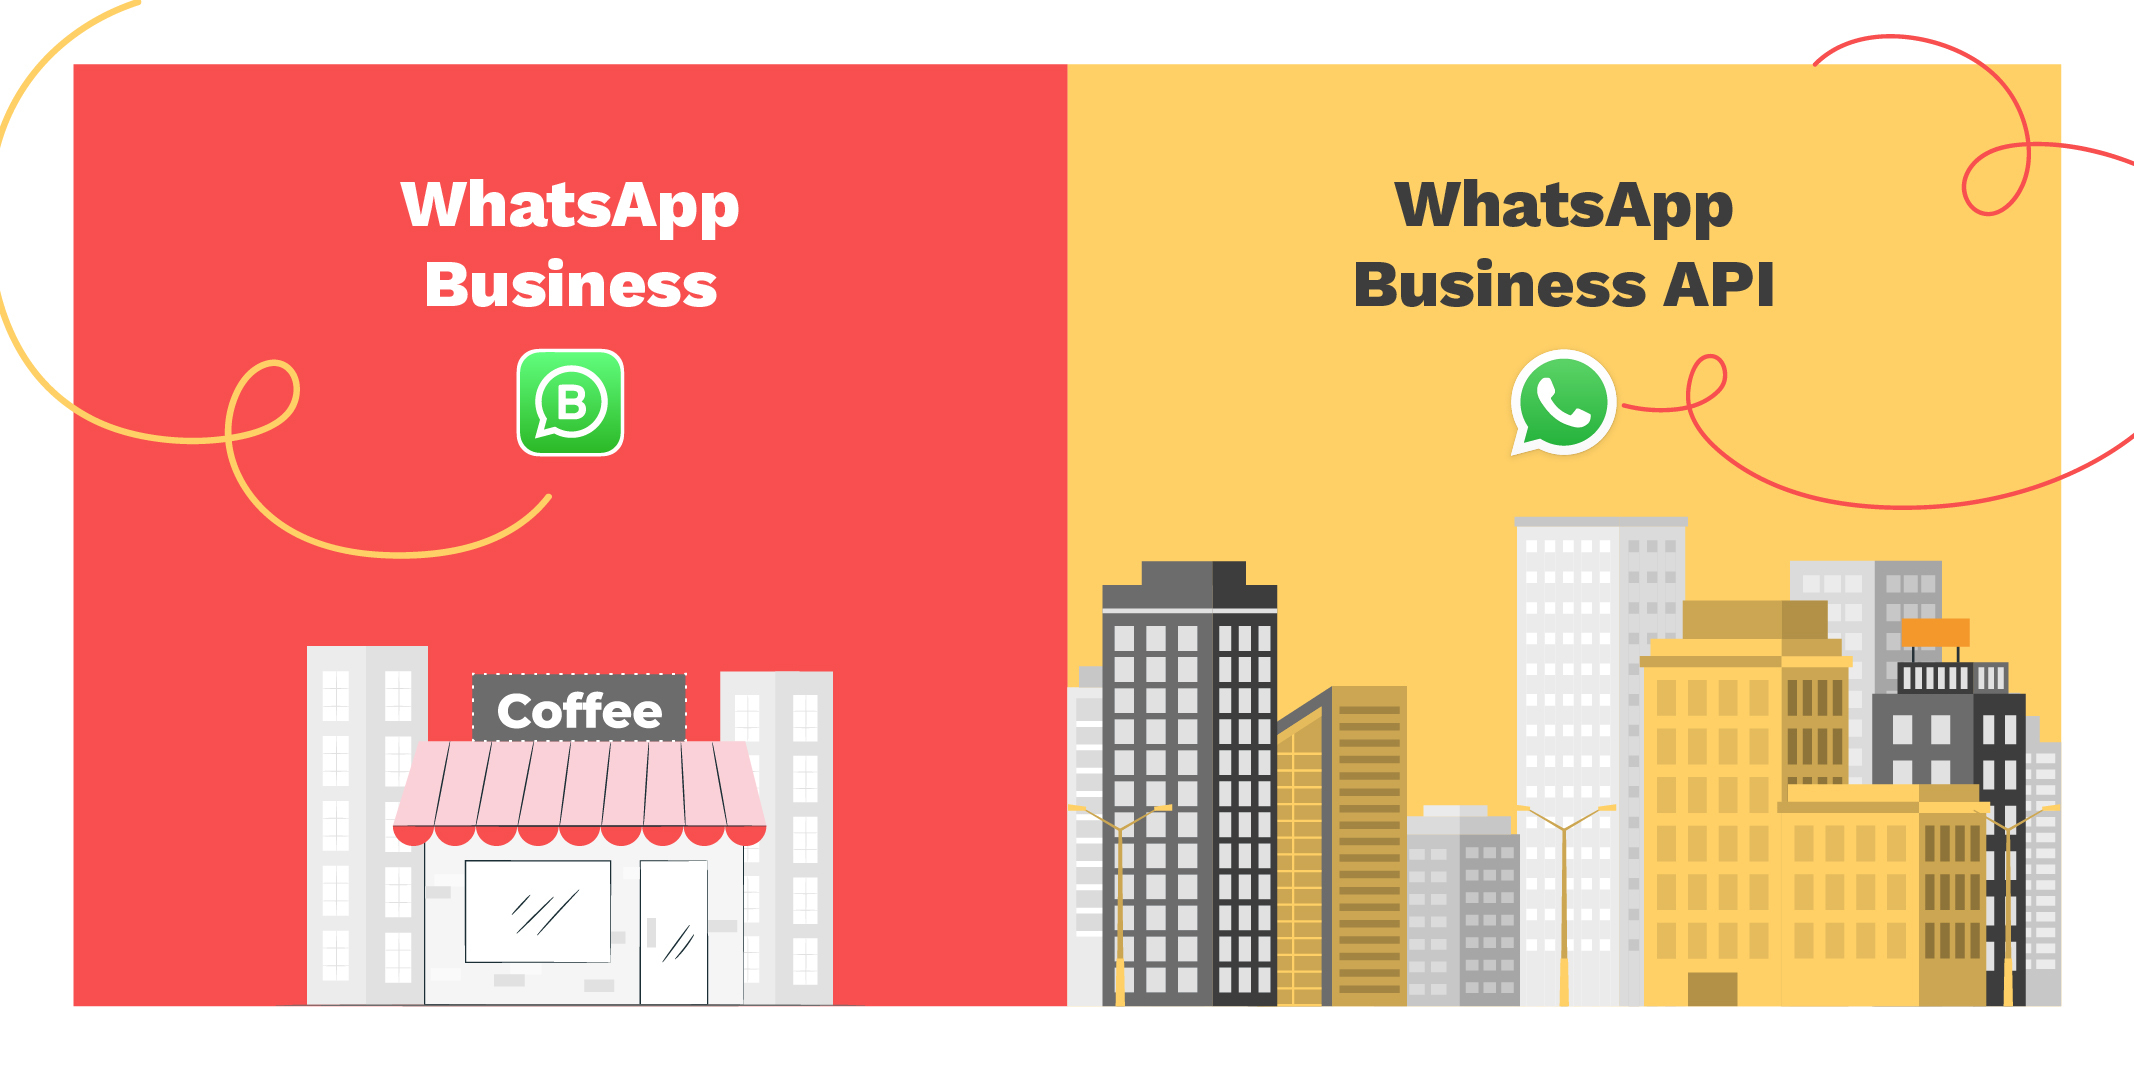 WhatsApp business vs WhatsApp business platform